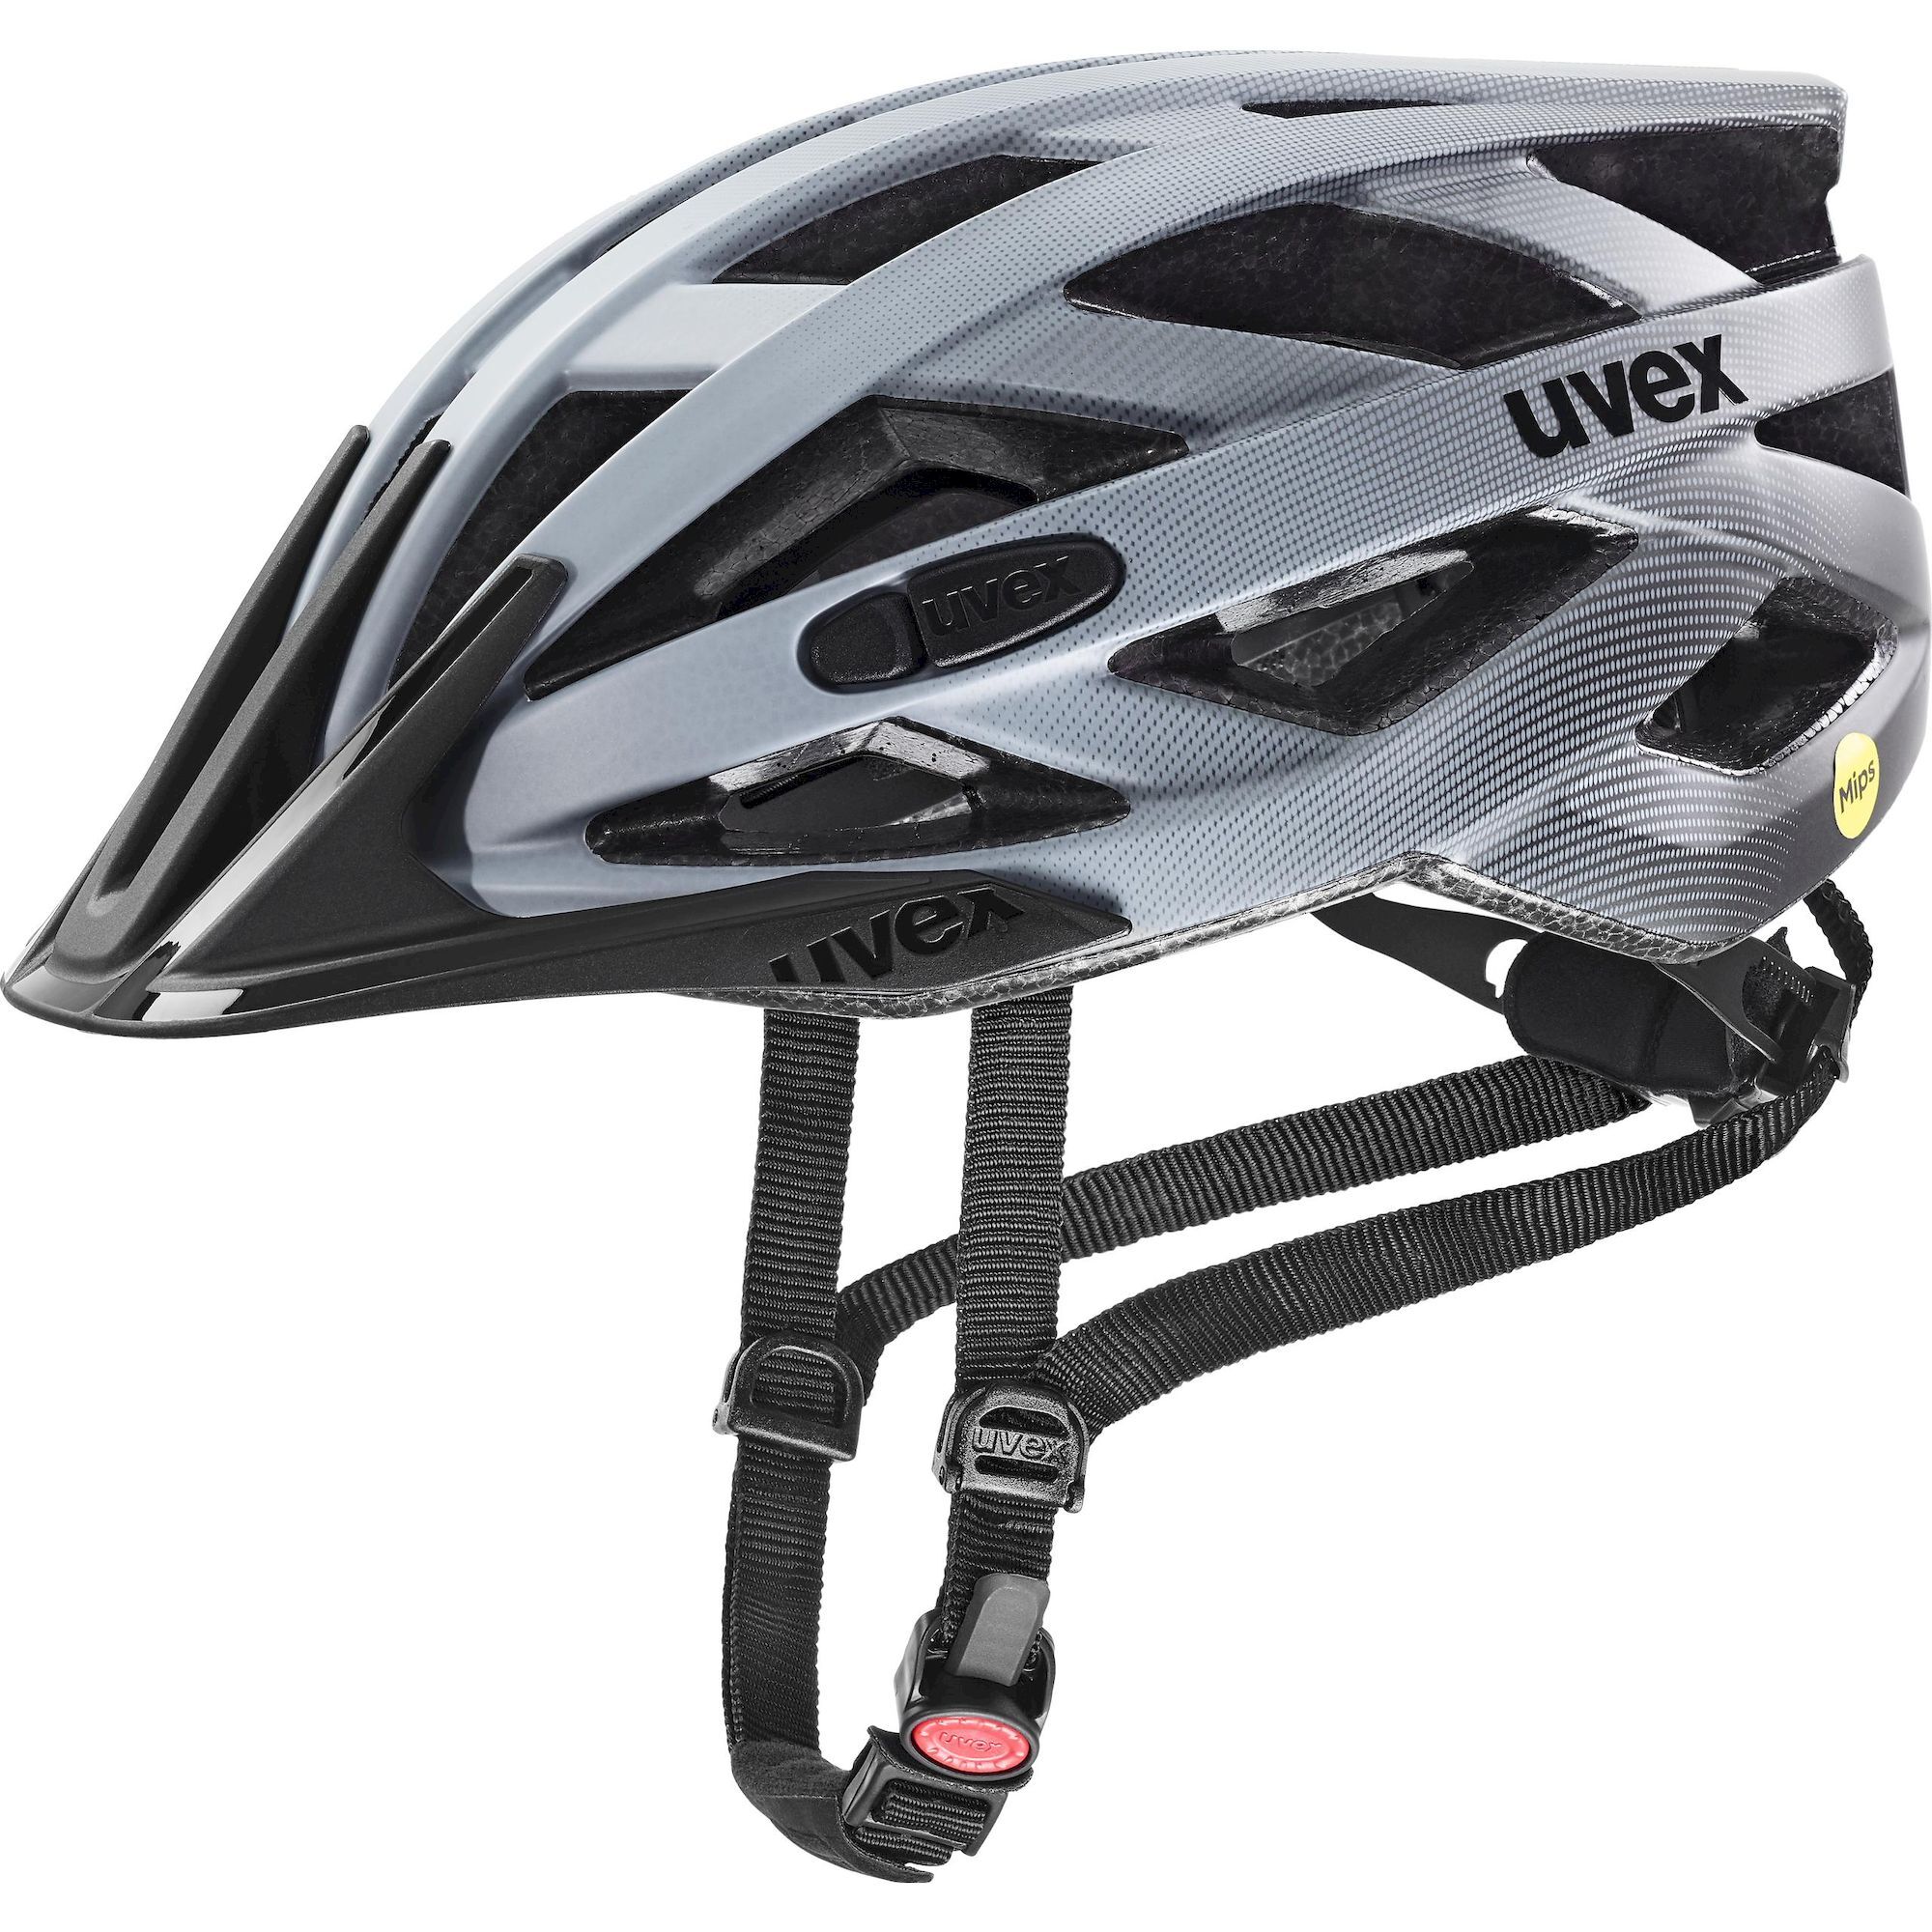 Uvex I-vo Cc MIPS - Road bike helmet